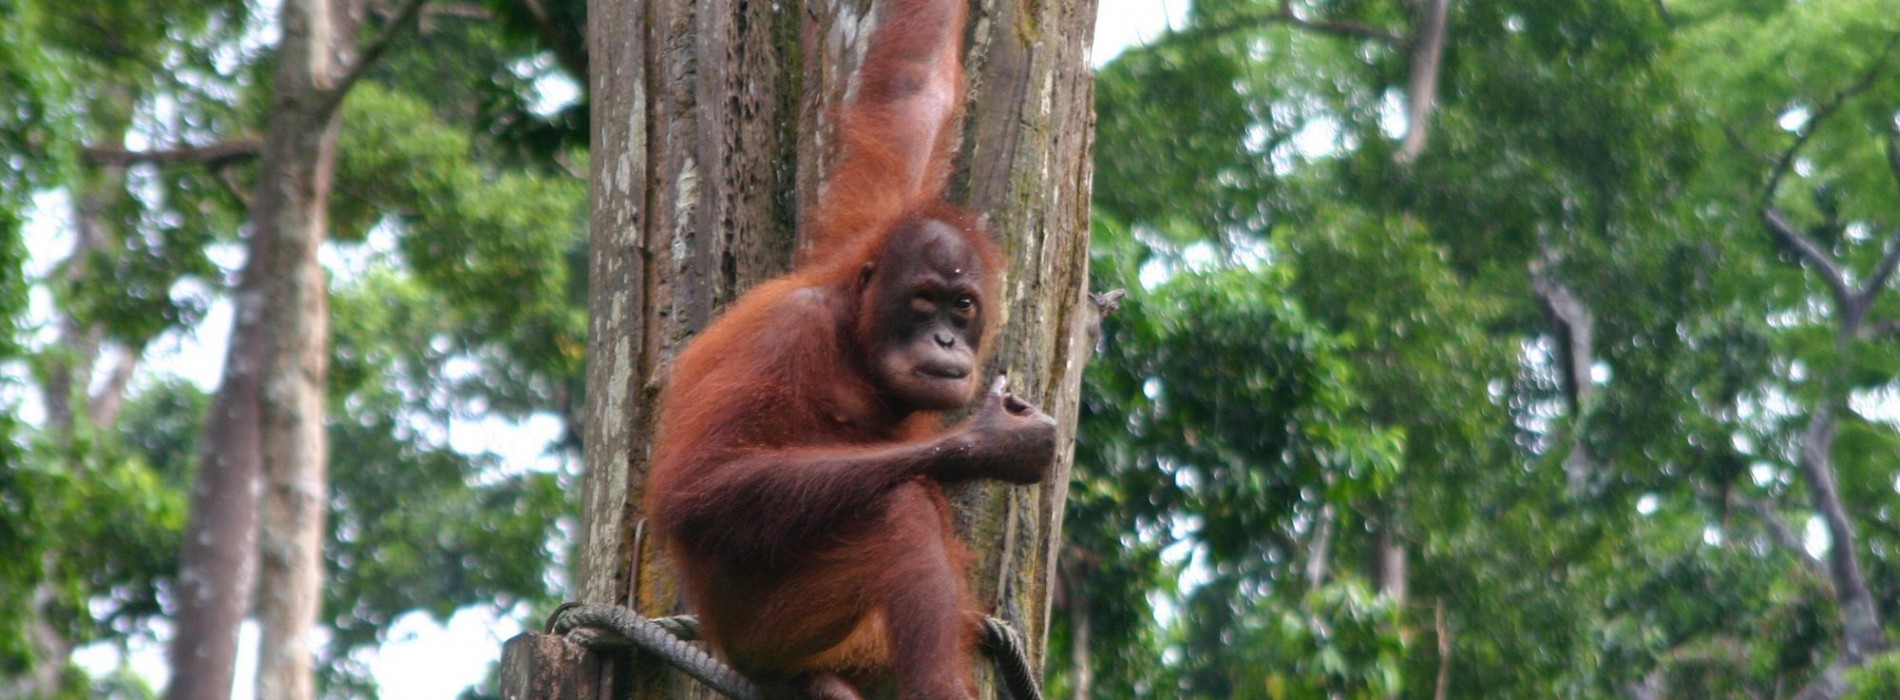 Orangutan_Borneo_Sanctuary.jpg